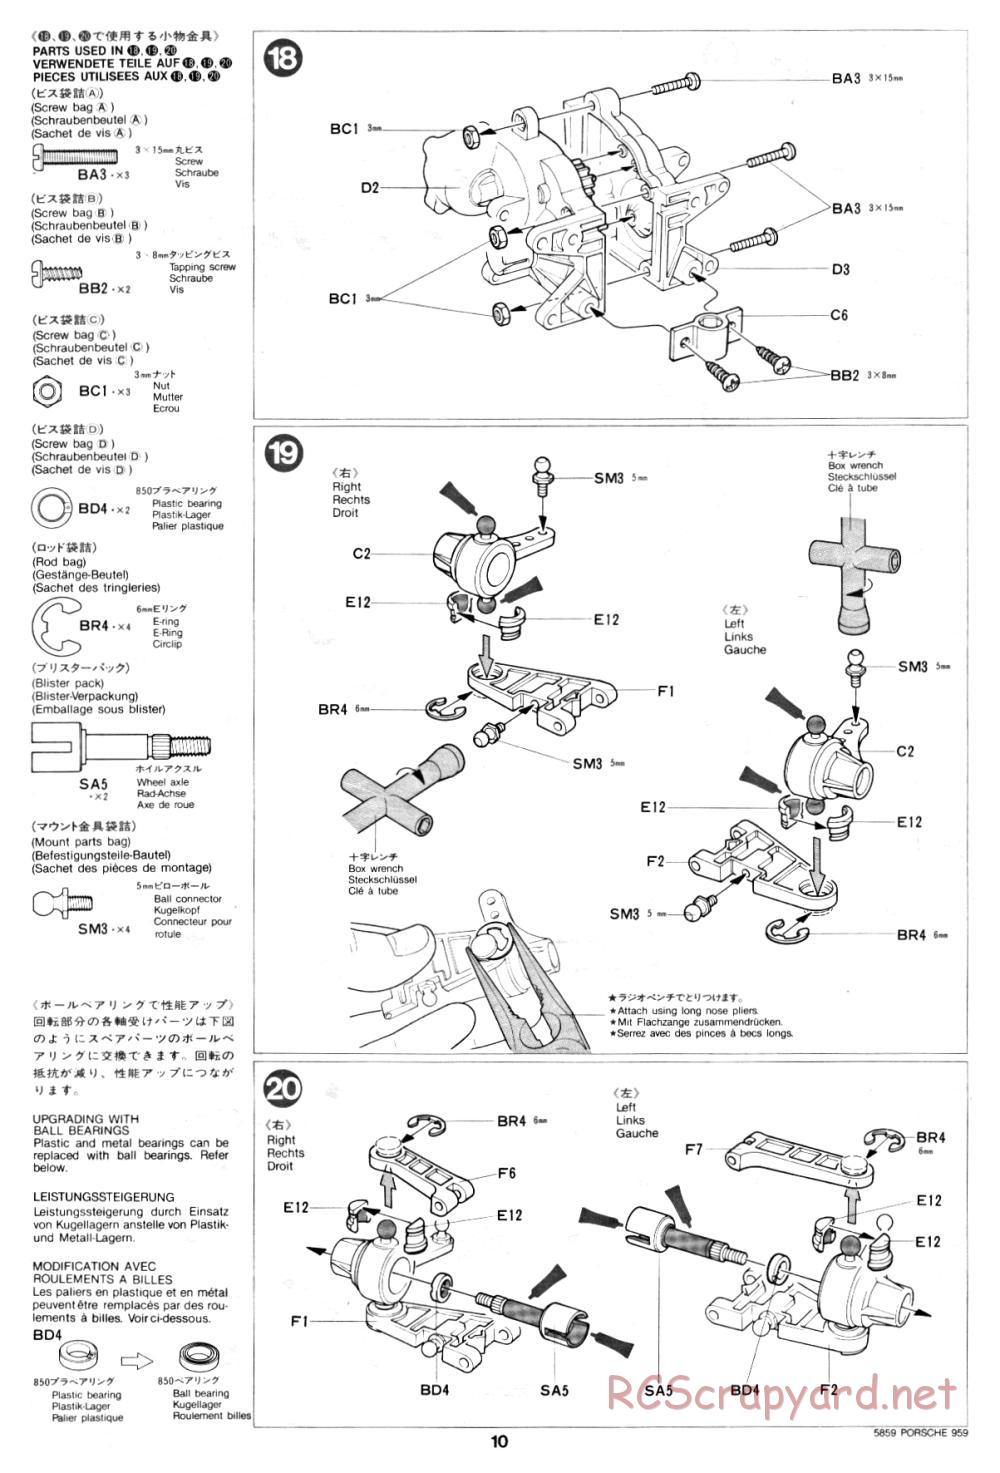 Tamiya - Porsche 959 - 58059 - Manual - Page 10